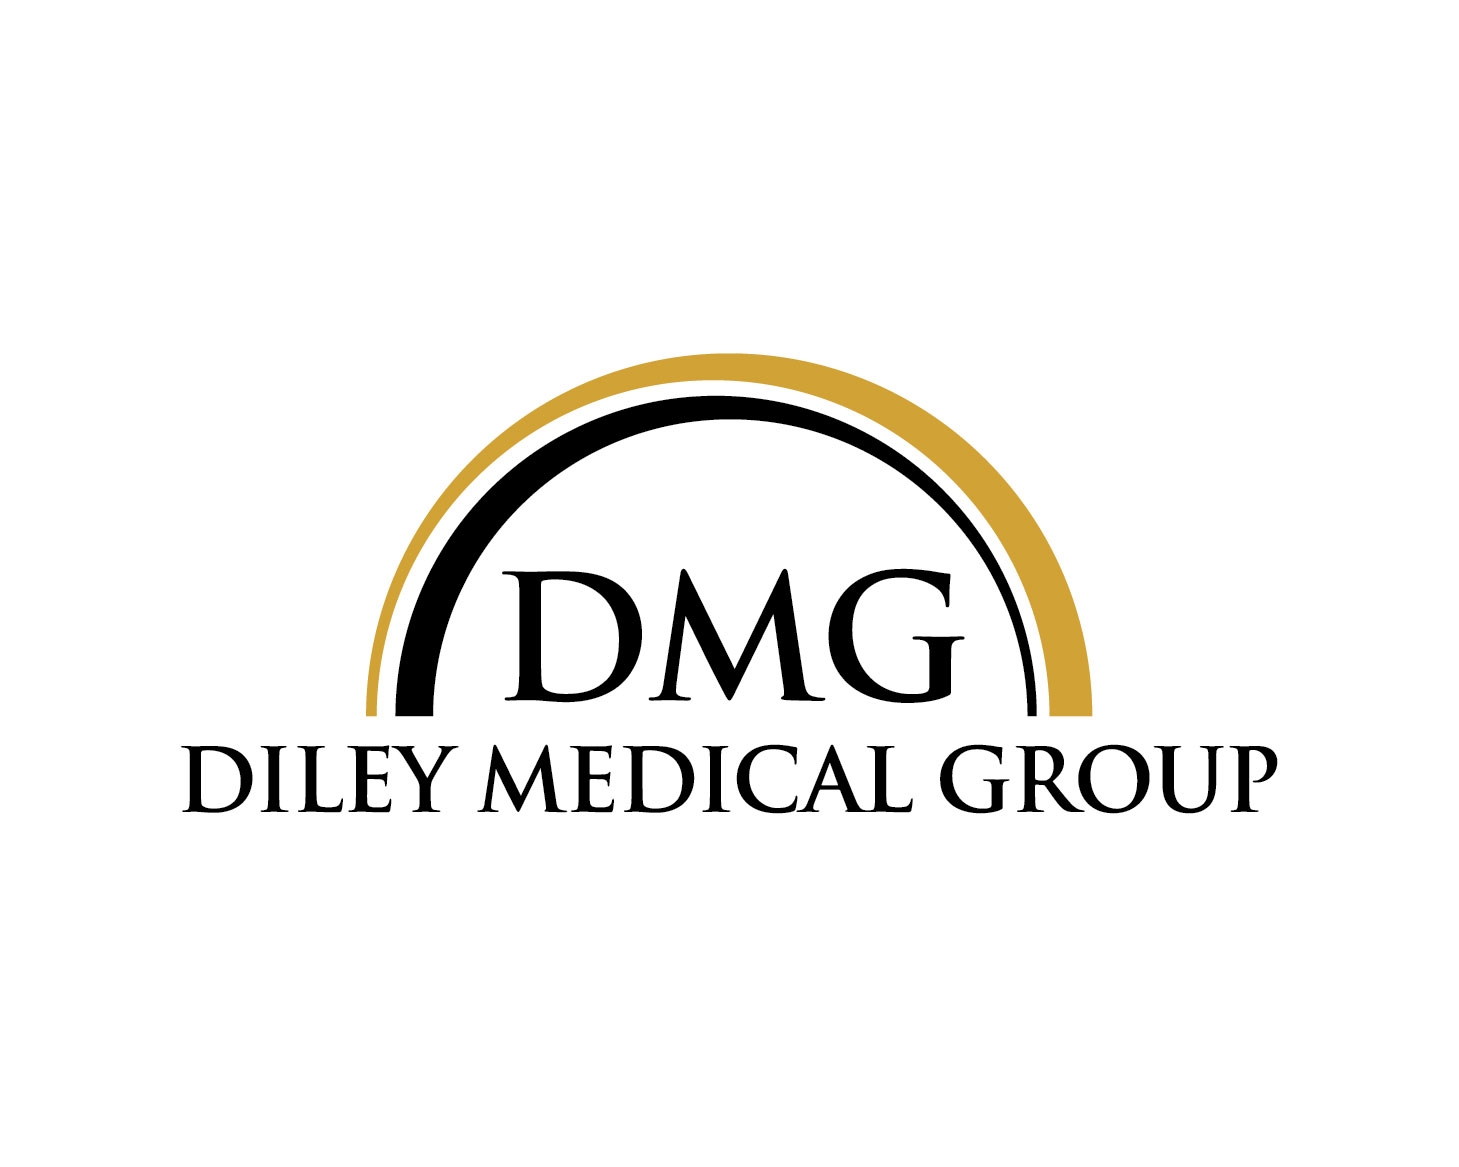 Diley Medical Group - final Logo.jpg